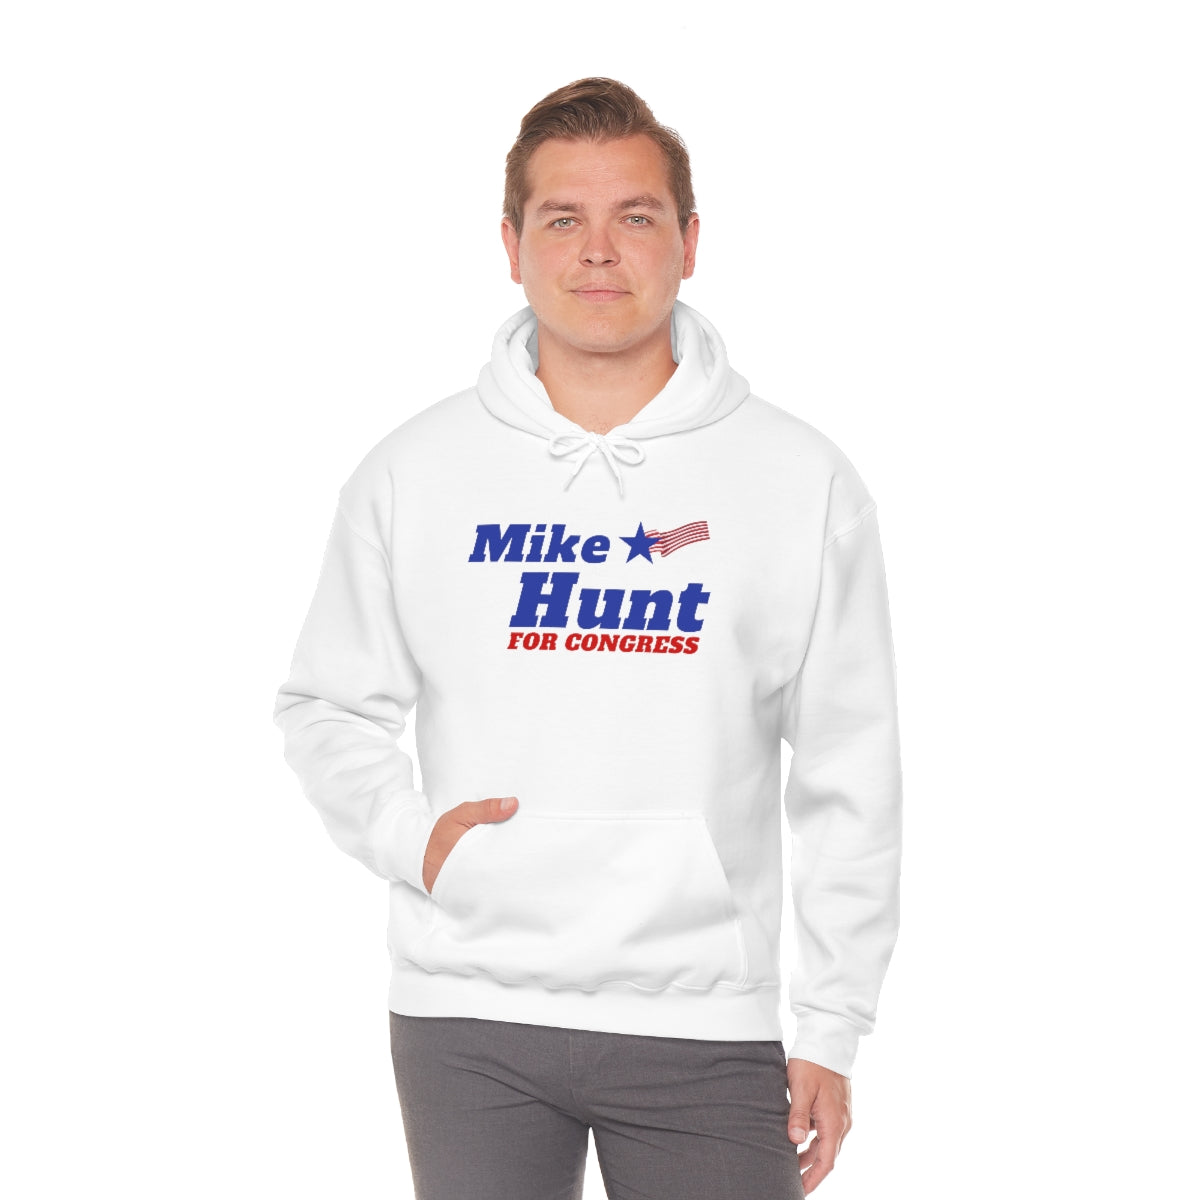 Mike Hunt - Unisex Heavy Blend™ Hooded Sweatshirt